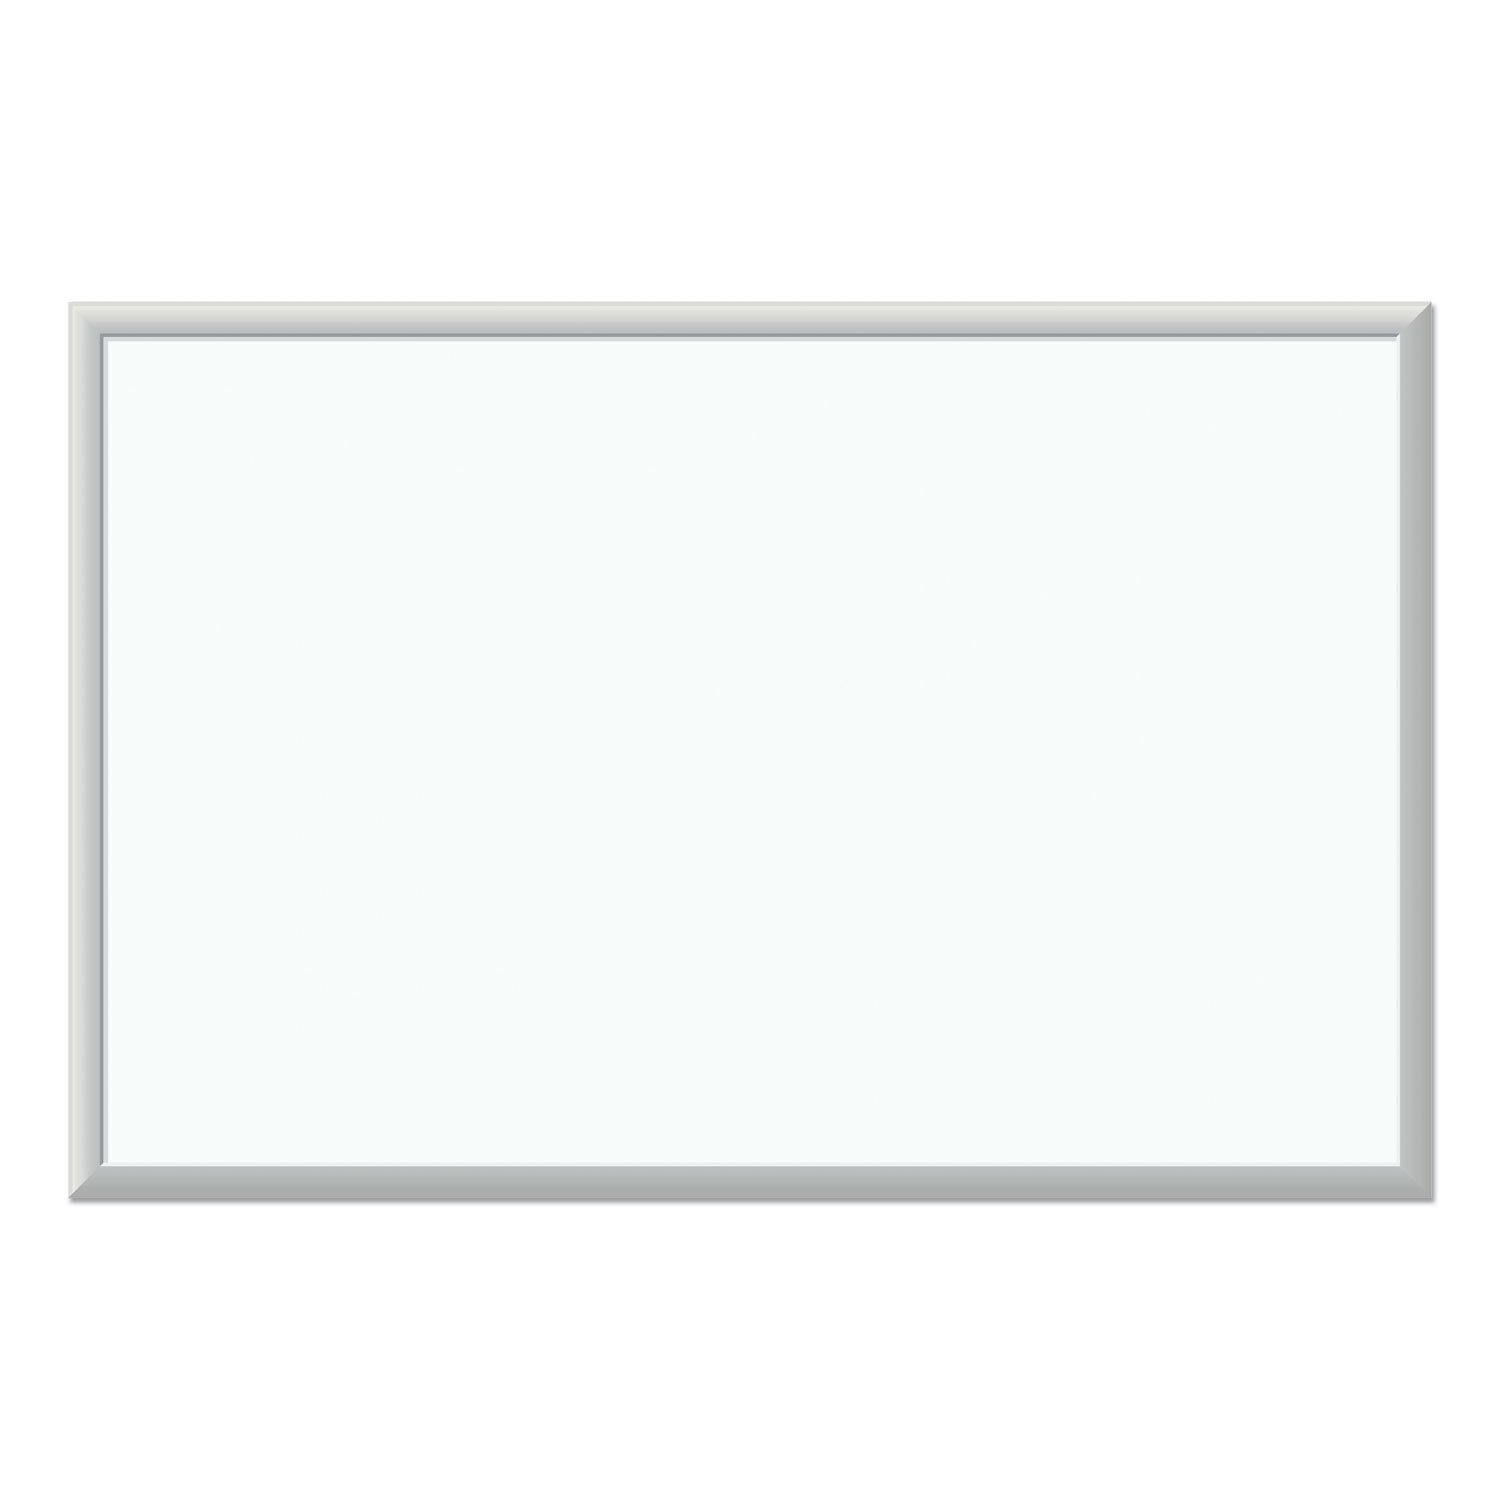 Melamine Dry Erase Board, 35 x 23, White Surface, Silver Frame